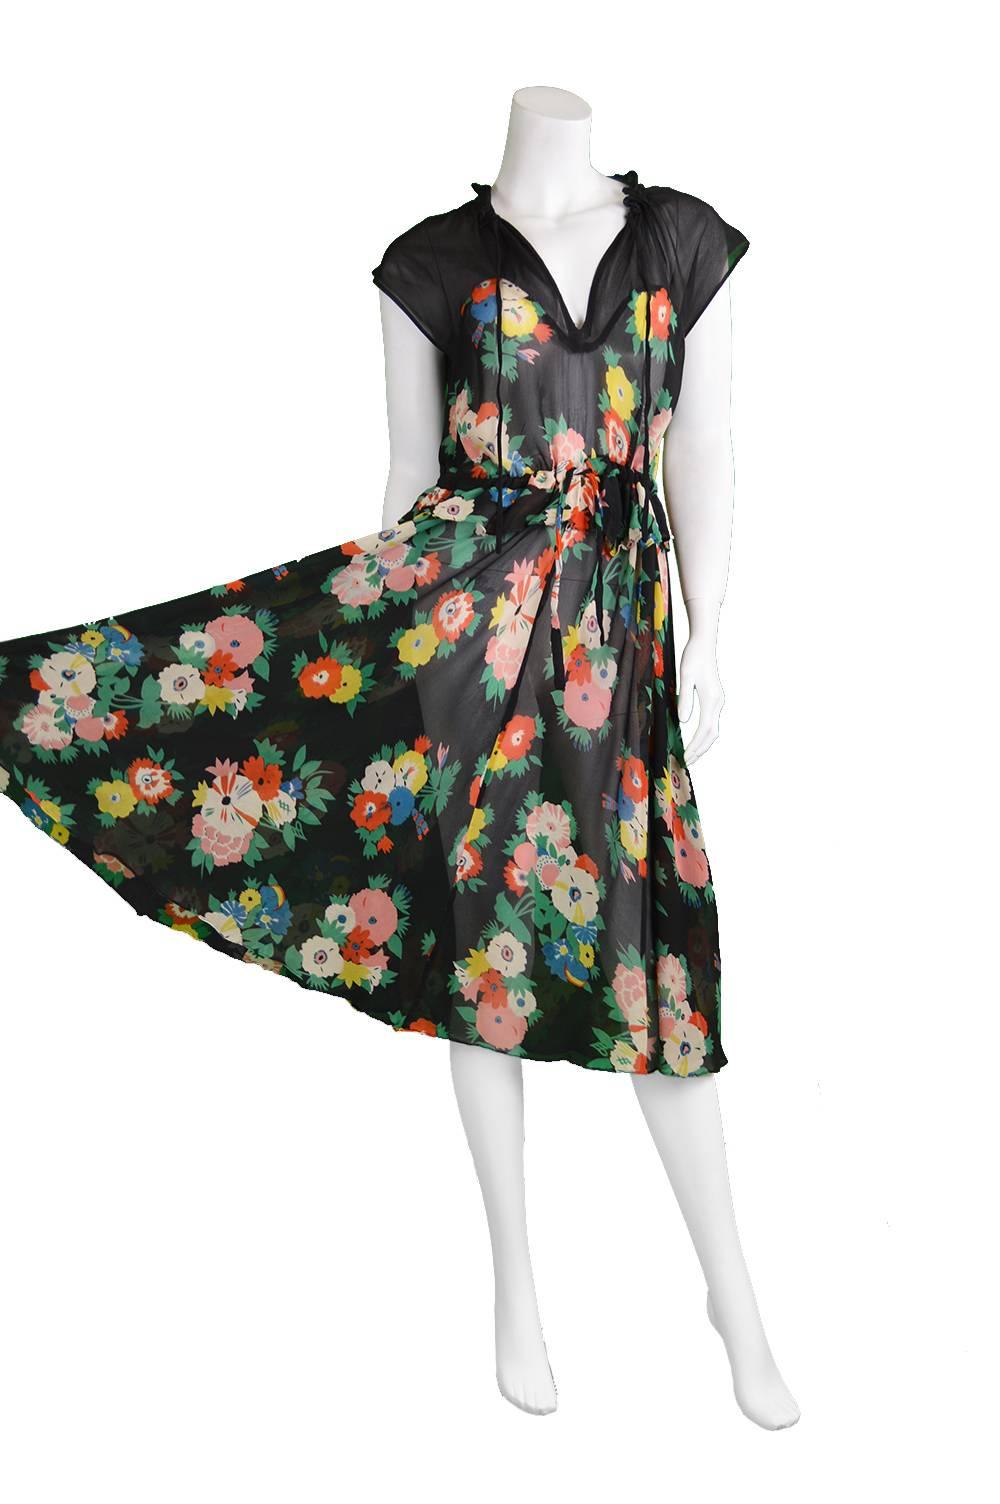 Black 1970s Ossie Clark Chiffon Dress with Celia Birtwell Floral Print